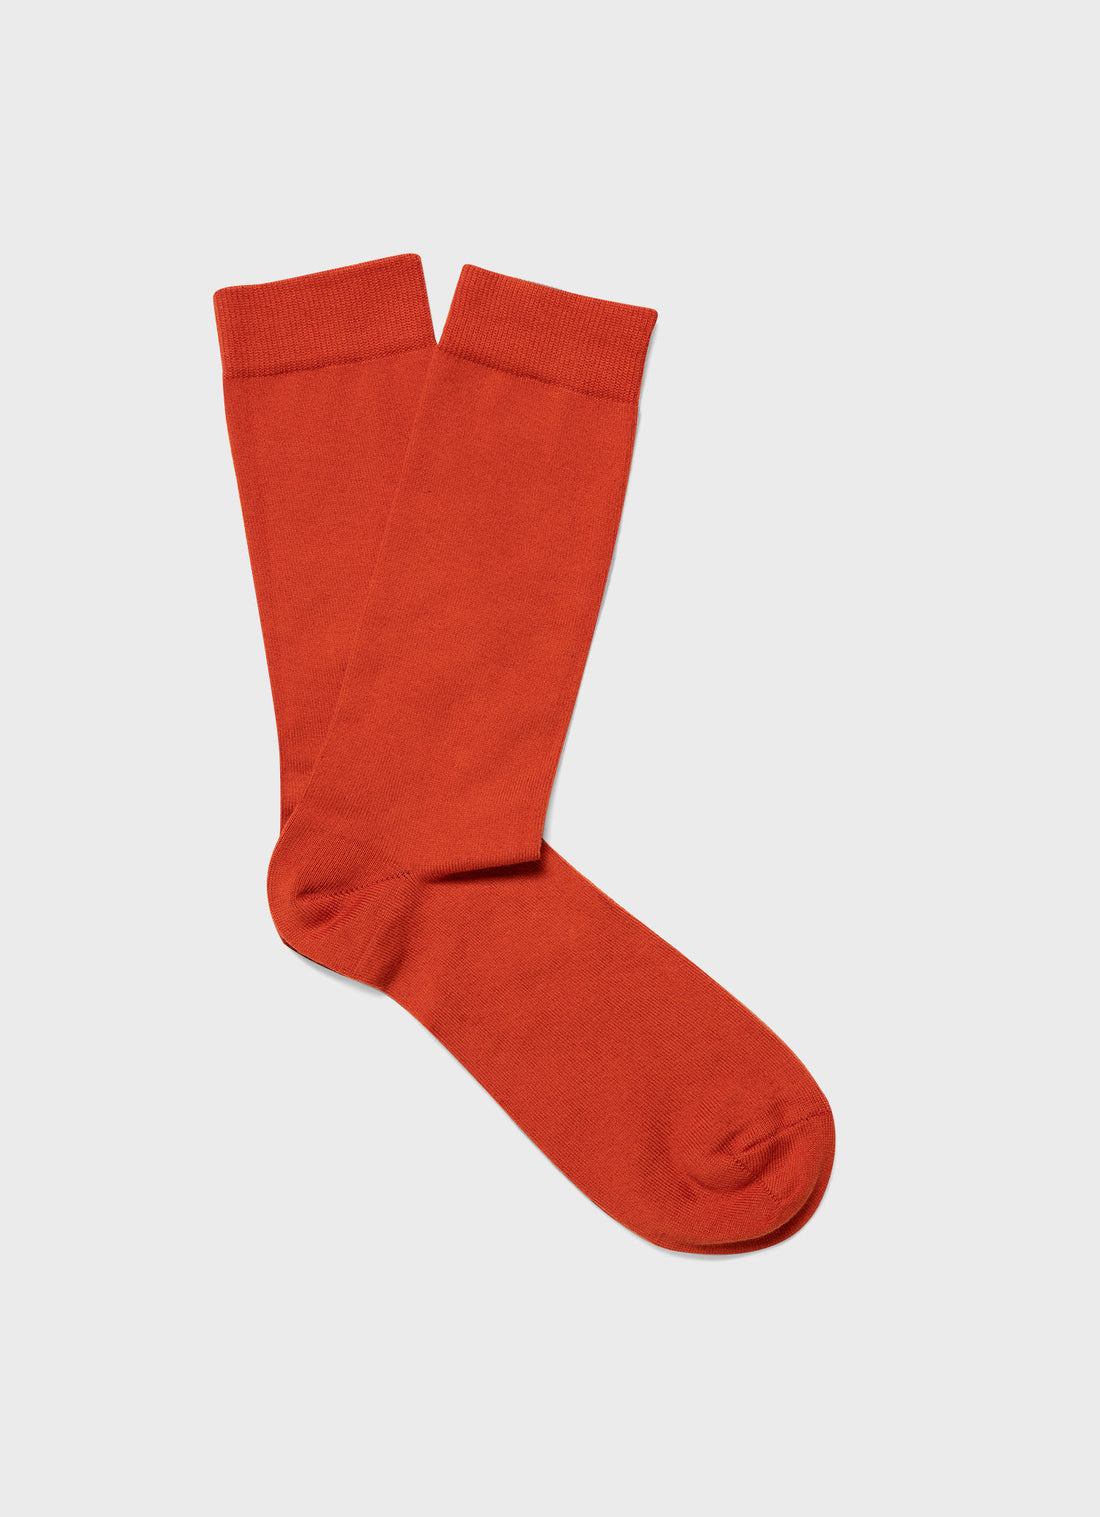 Men's Cotton Sock in Burnt Sienna